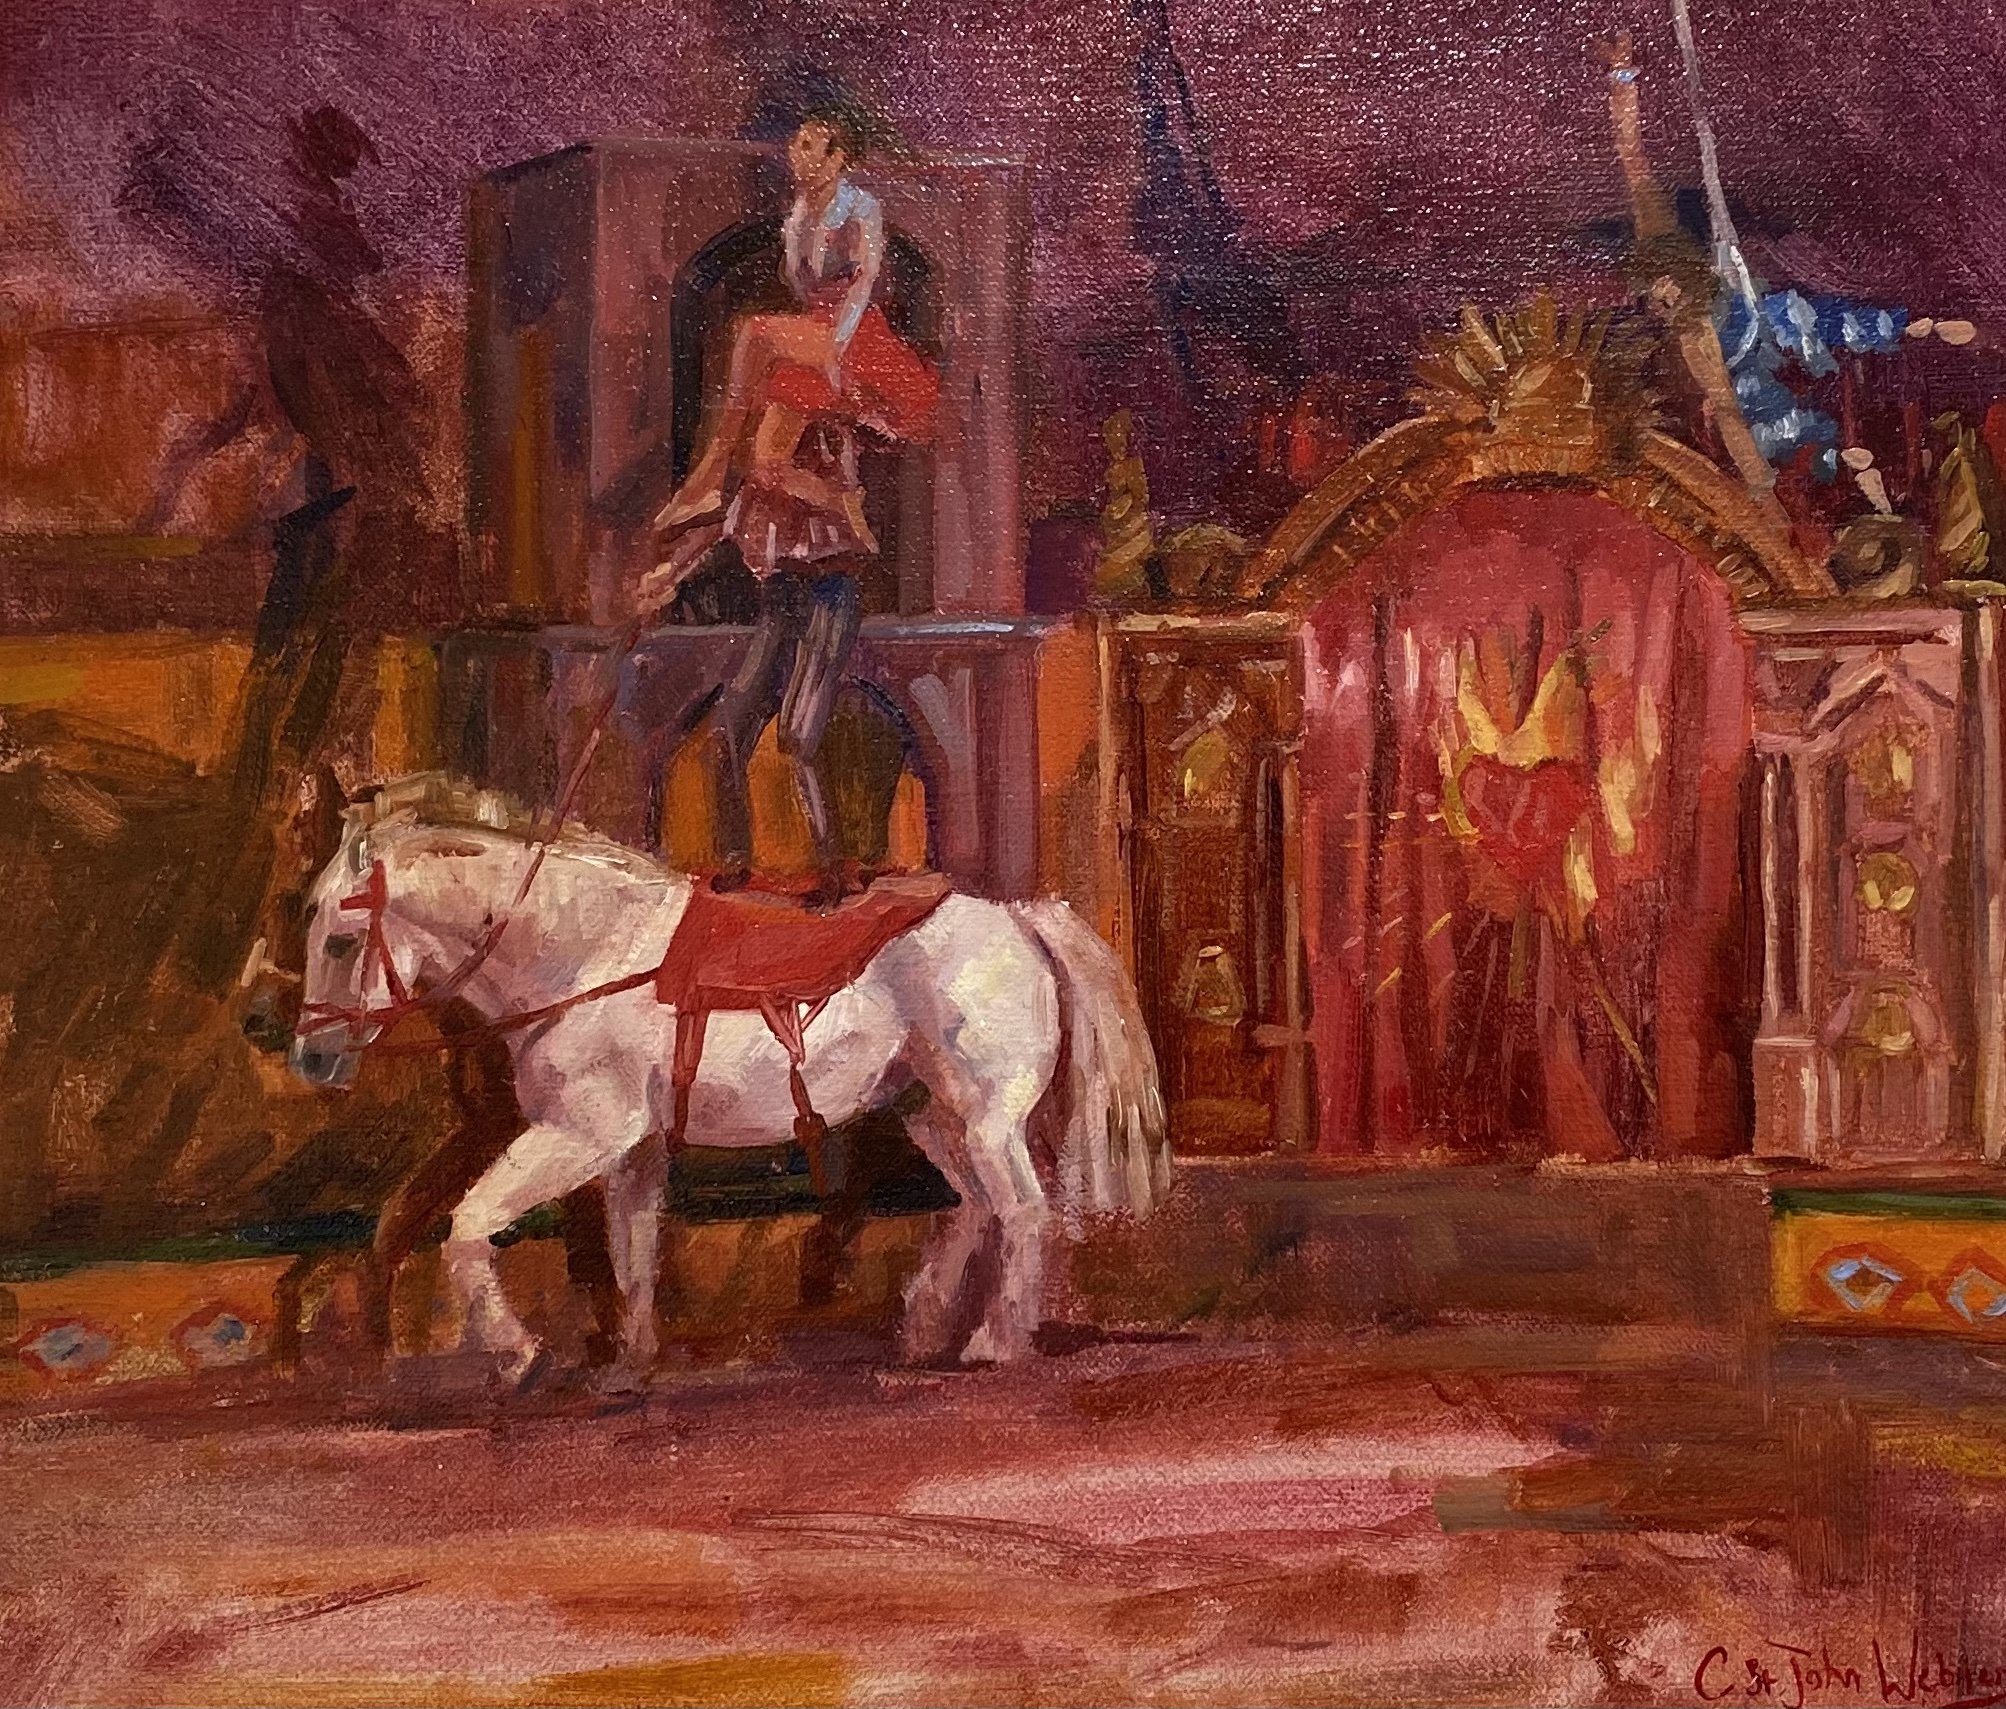 Horse balancing act - 31 x 36 cm - Oil on canvas (1).jpeg